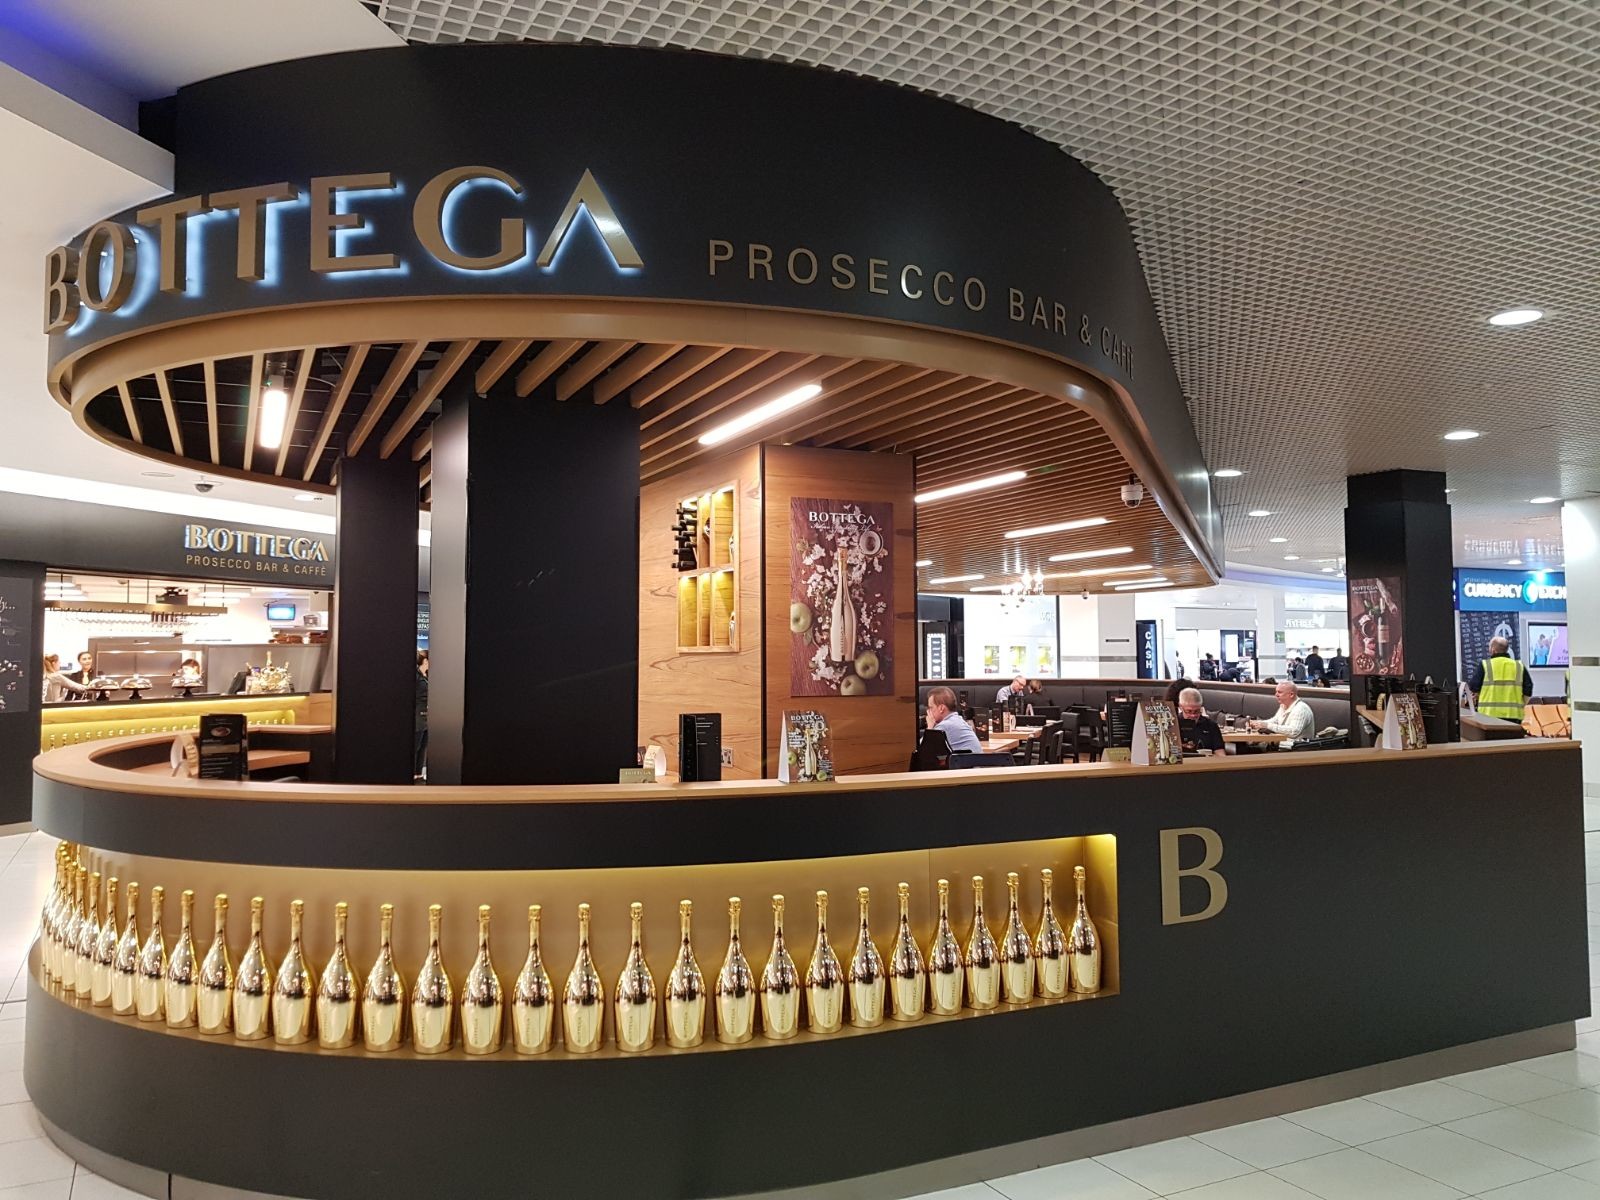 SSP’s Bottega Prosecco Bar at Birmingham wins Airport Bar of the Year award at Drinks International Travel Retail Awards 2018